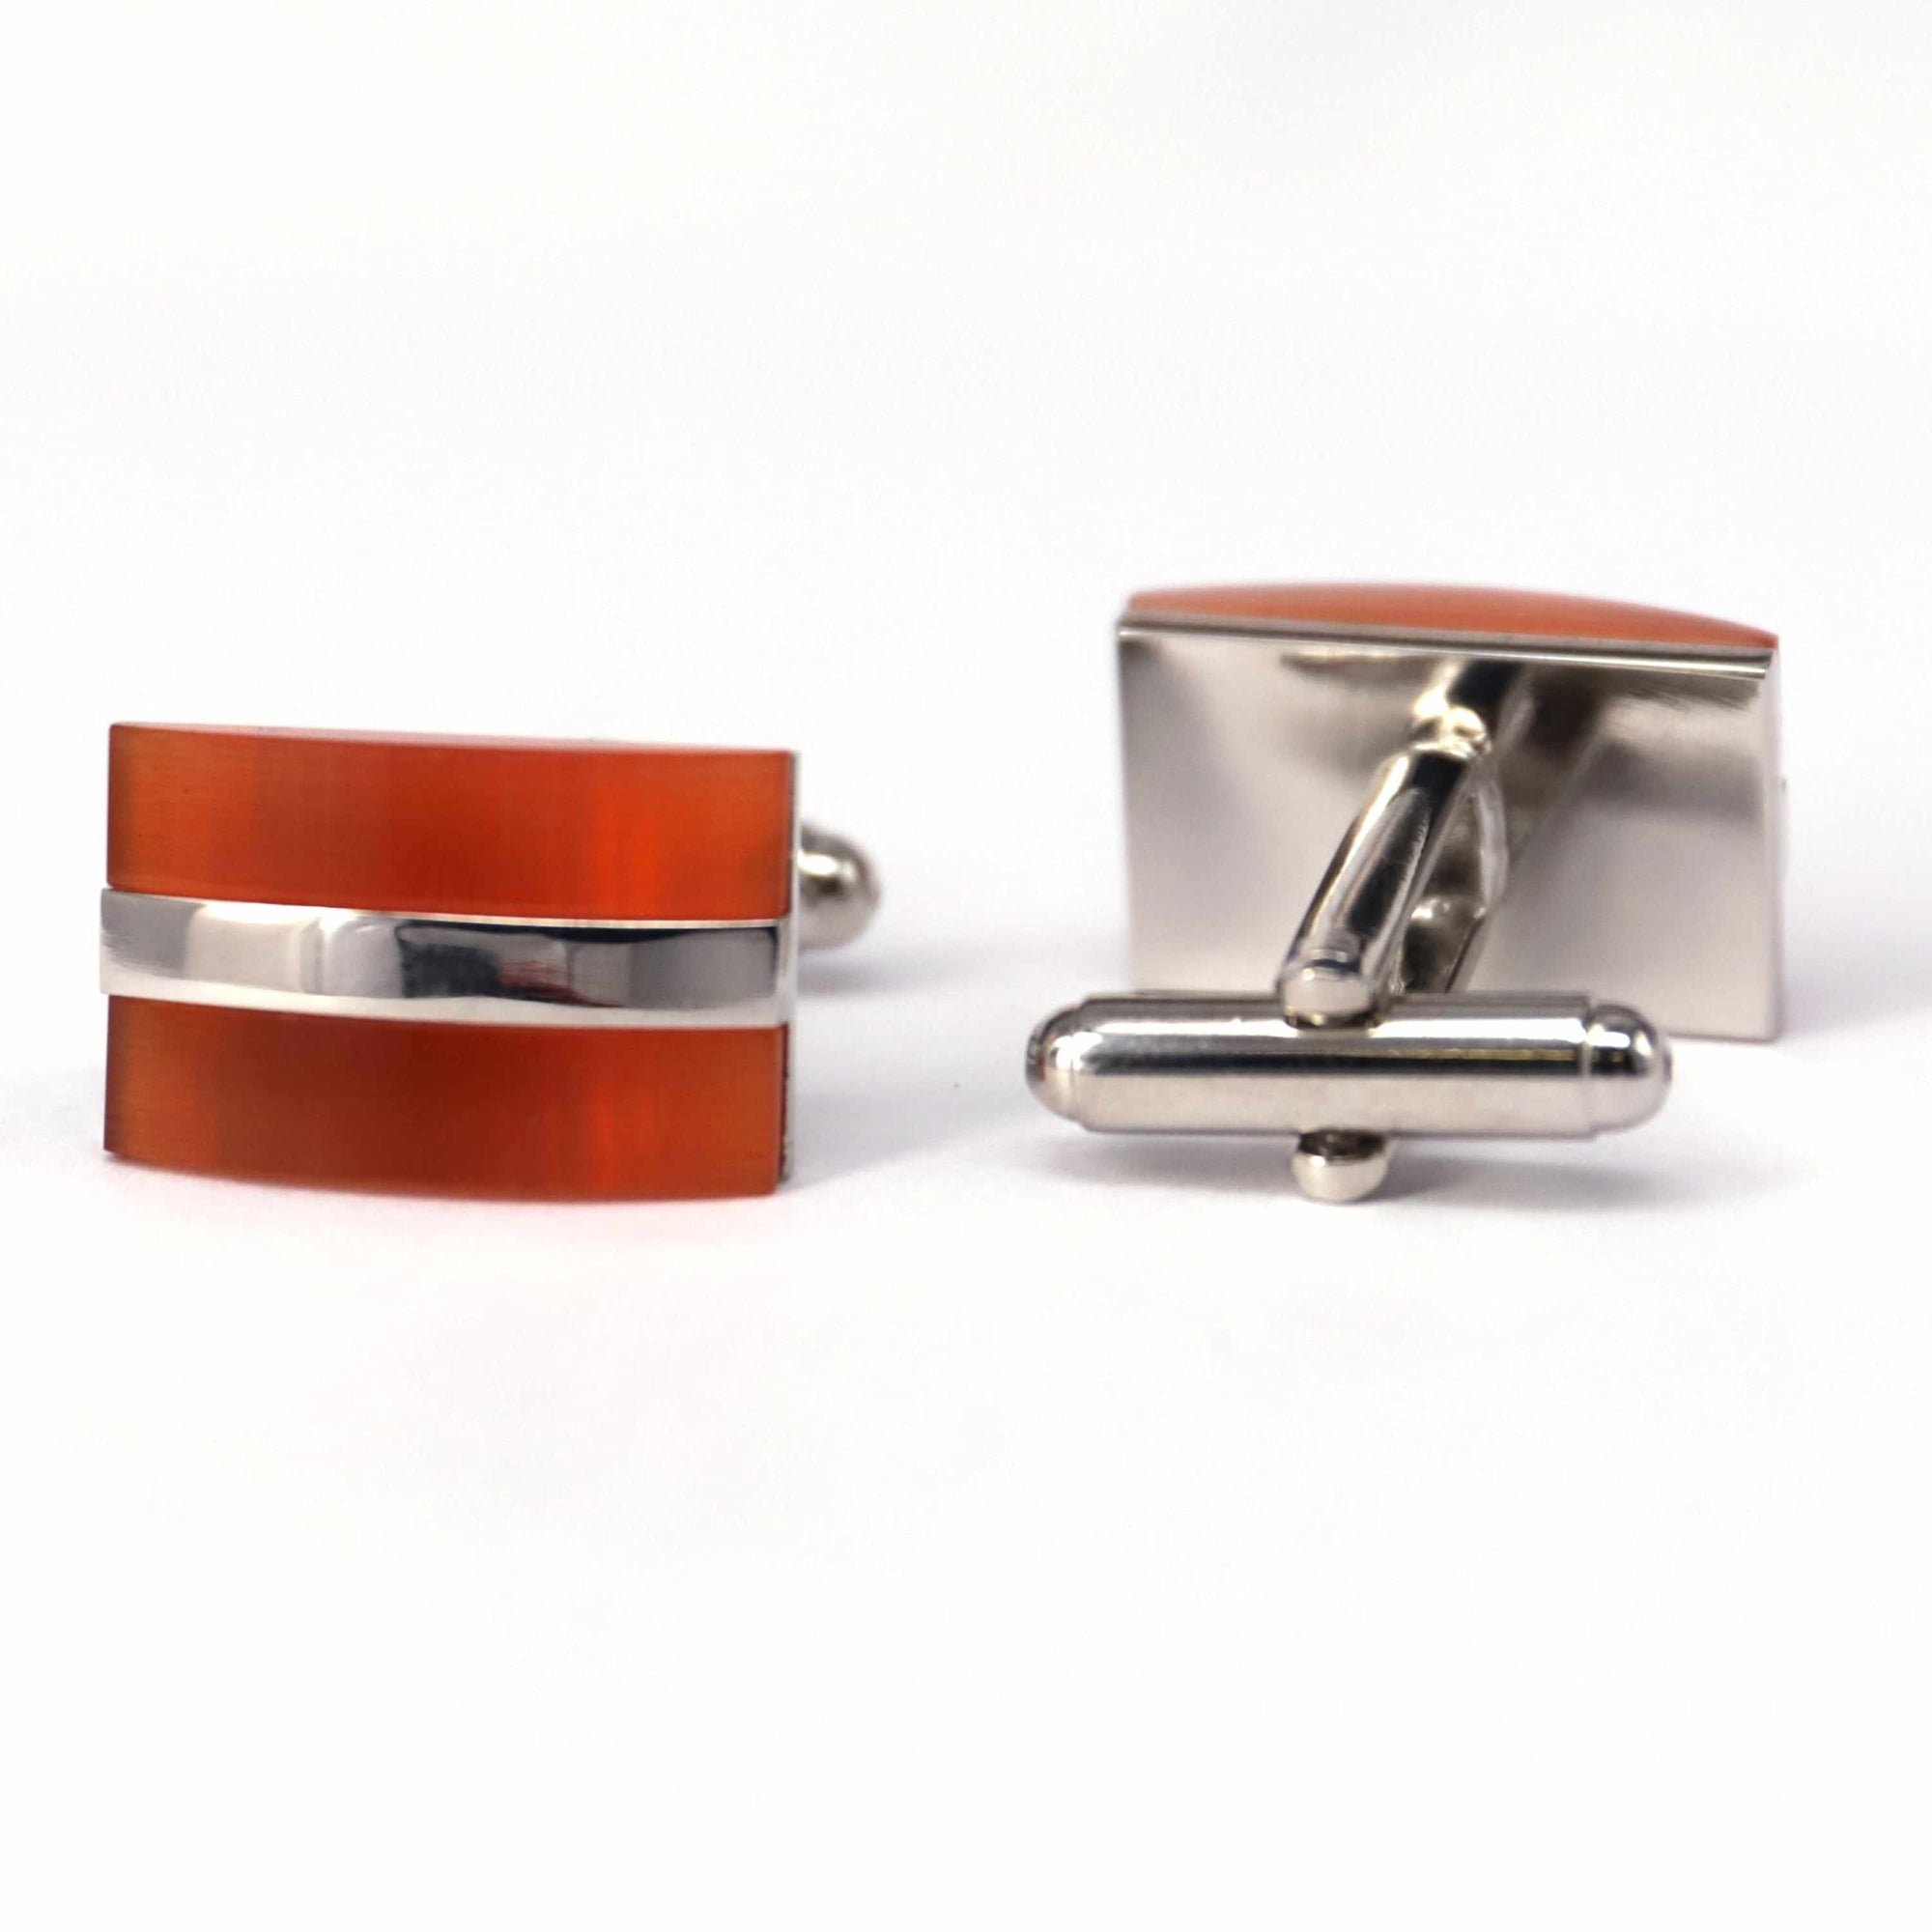 Rectangular Orange Fiber Glass Cufflinks with Silver Inserts-Cufflinks.com.sg